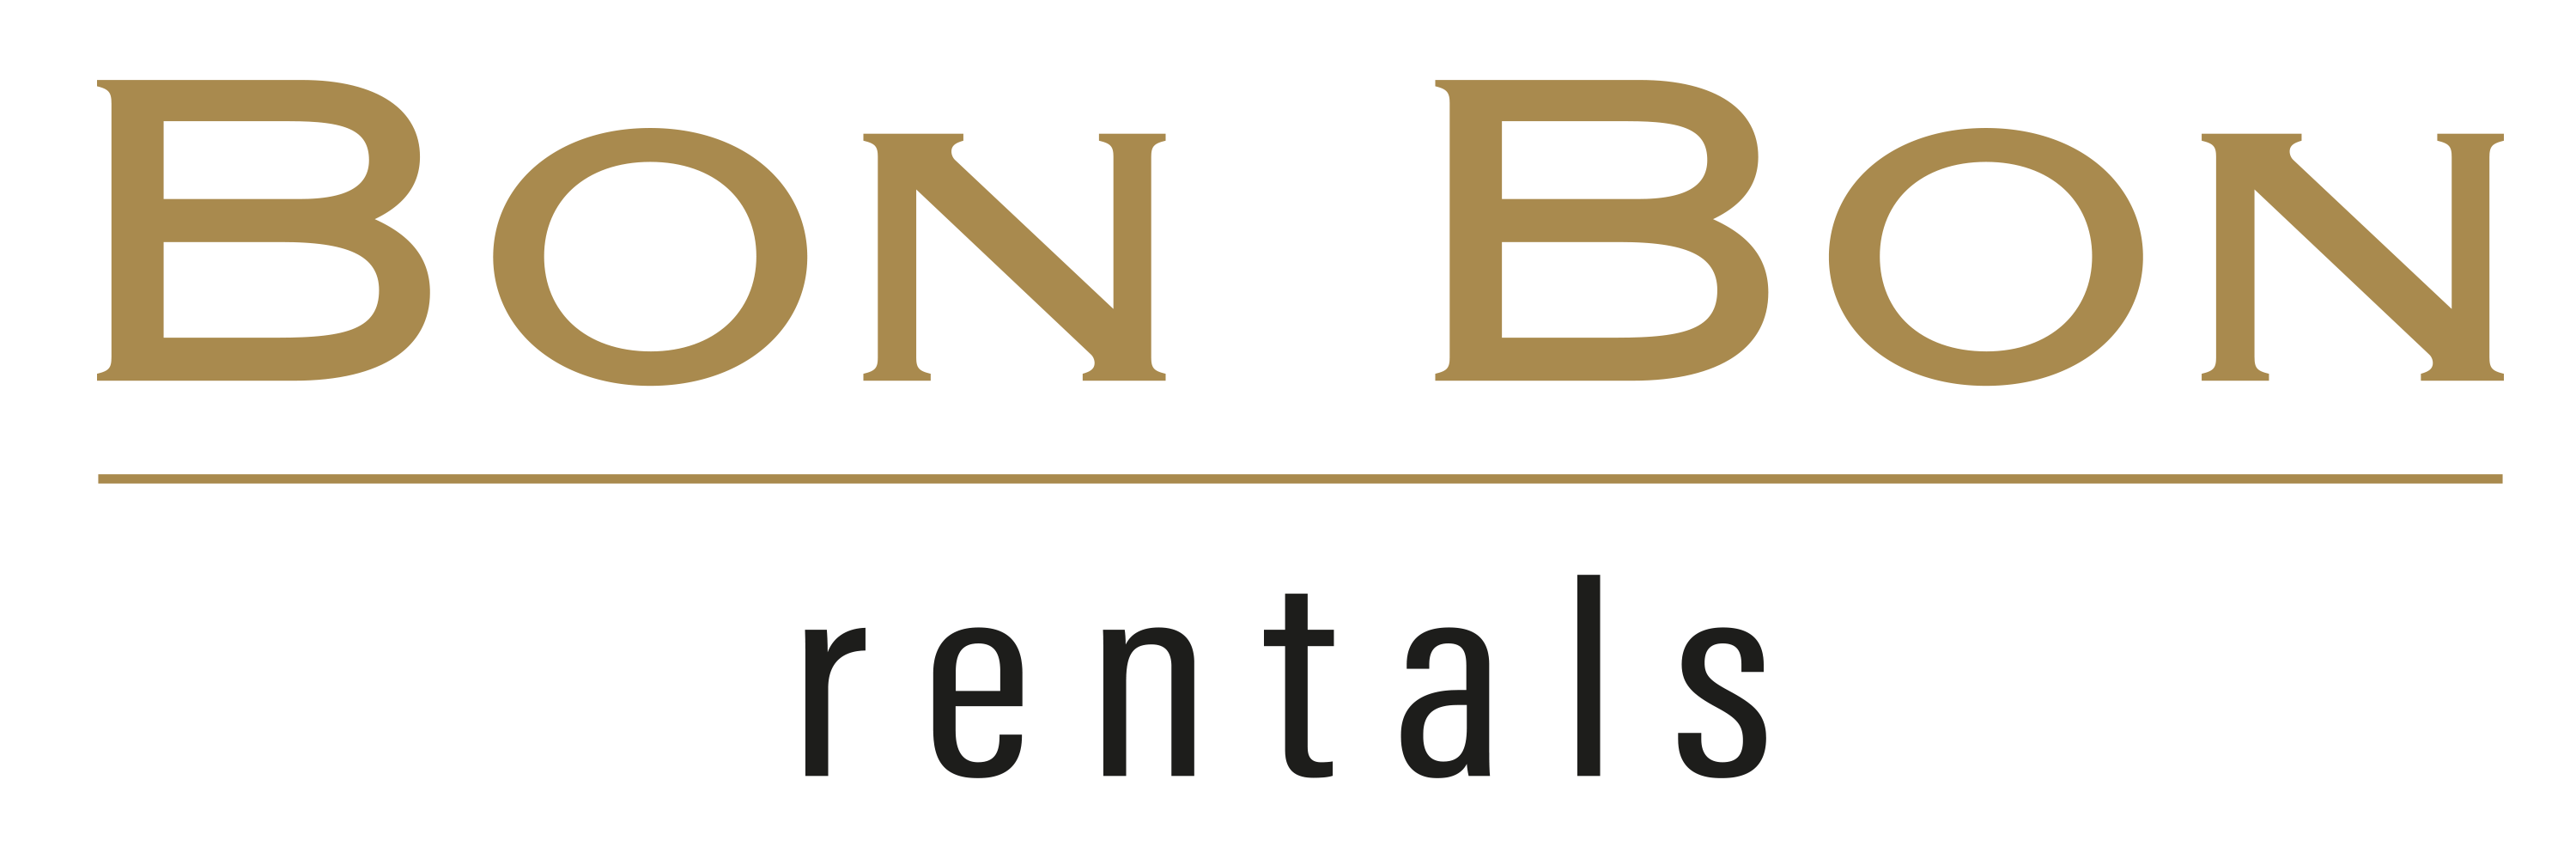 Bon Bon catering & events Logo